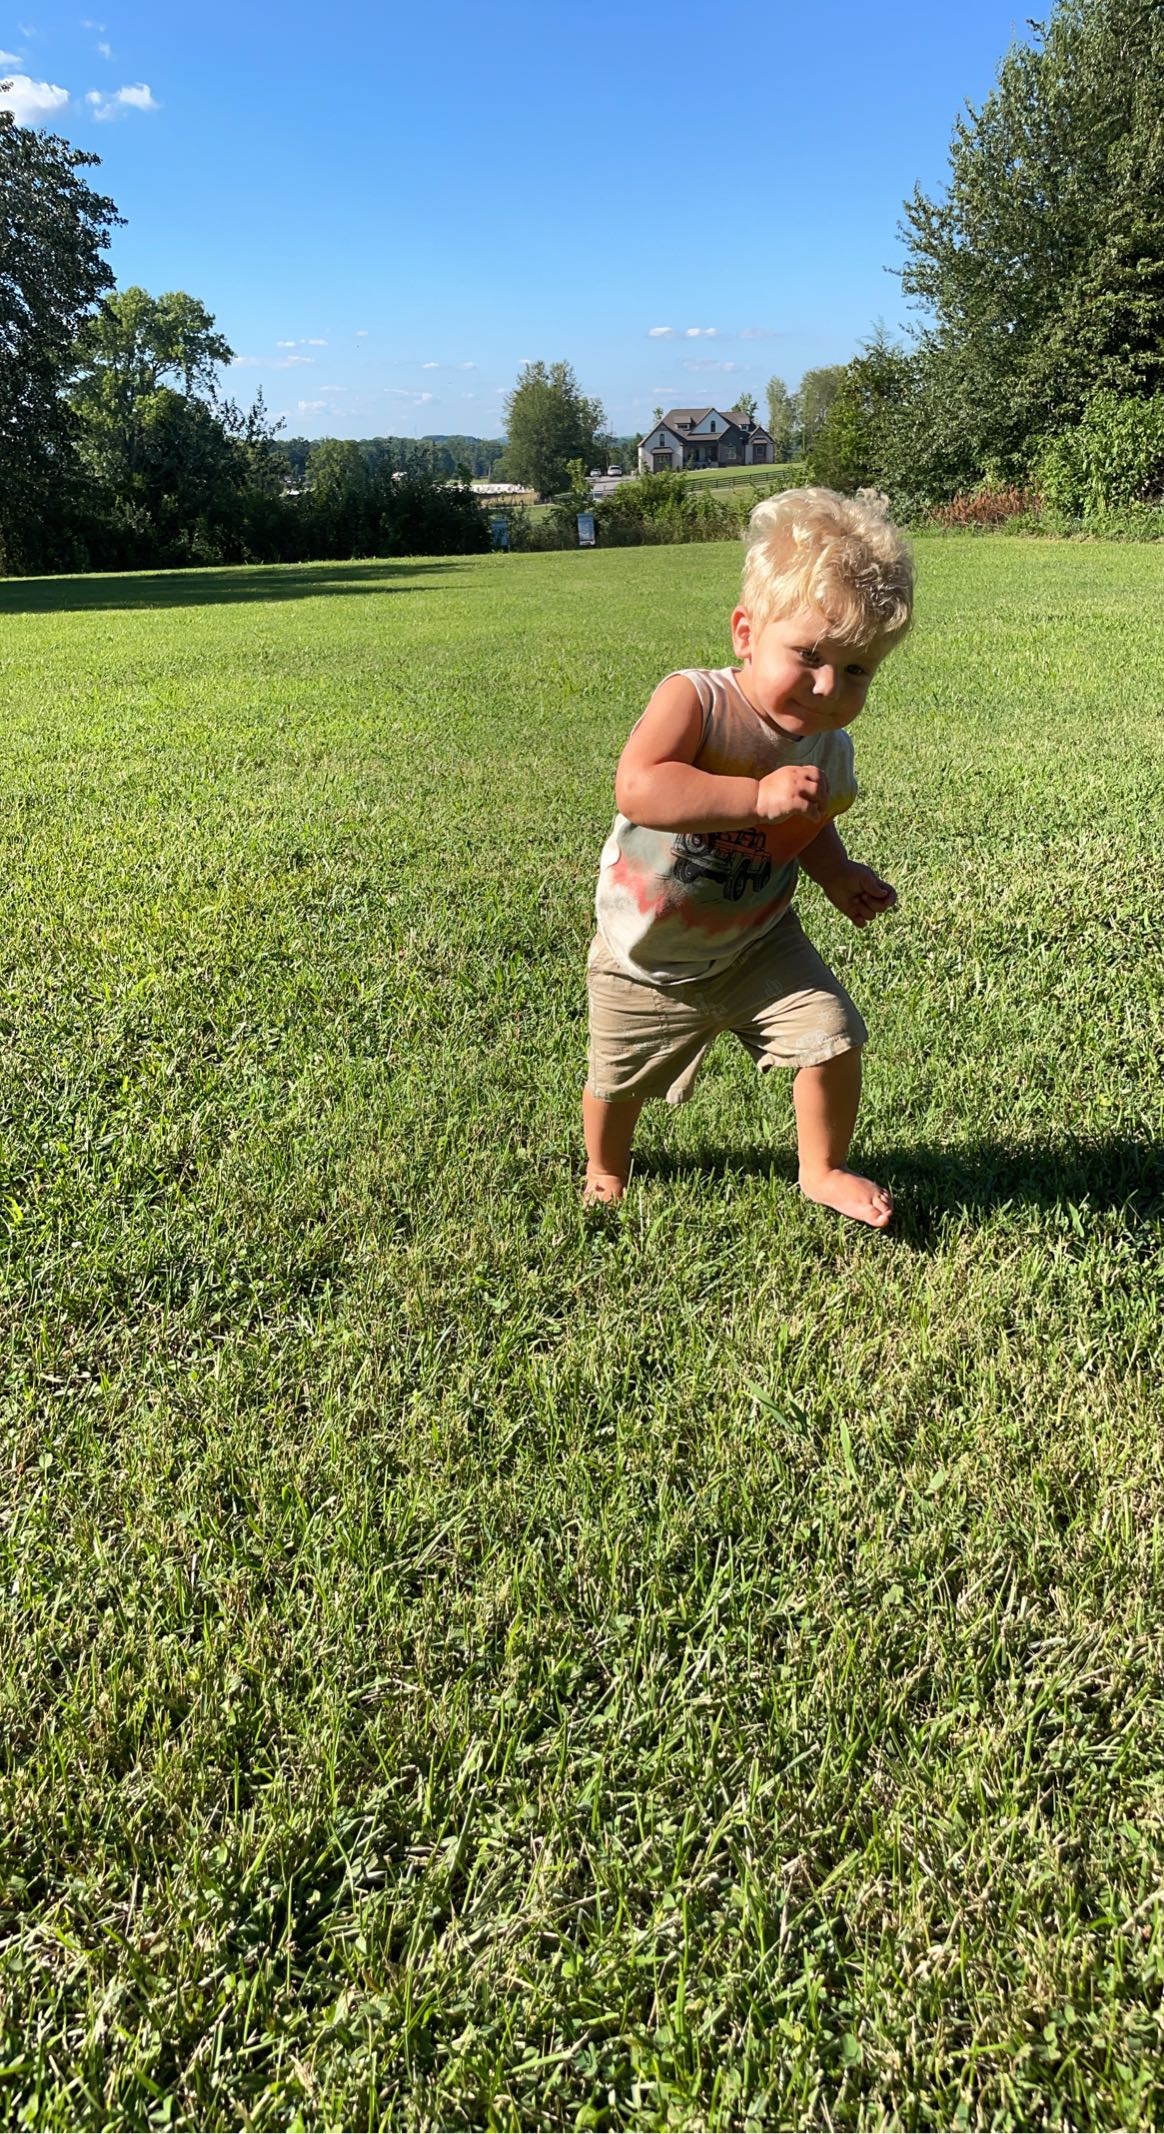 a young boy runs on a grassy field